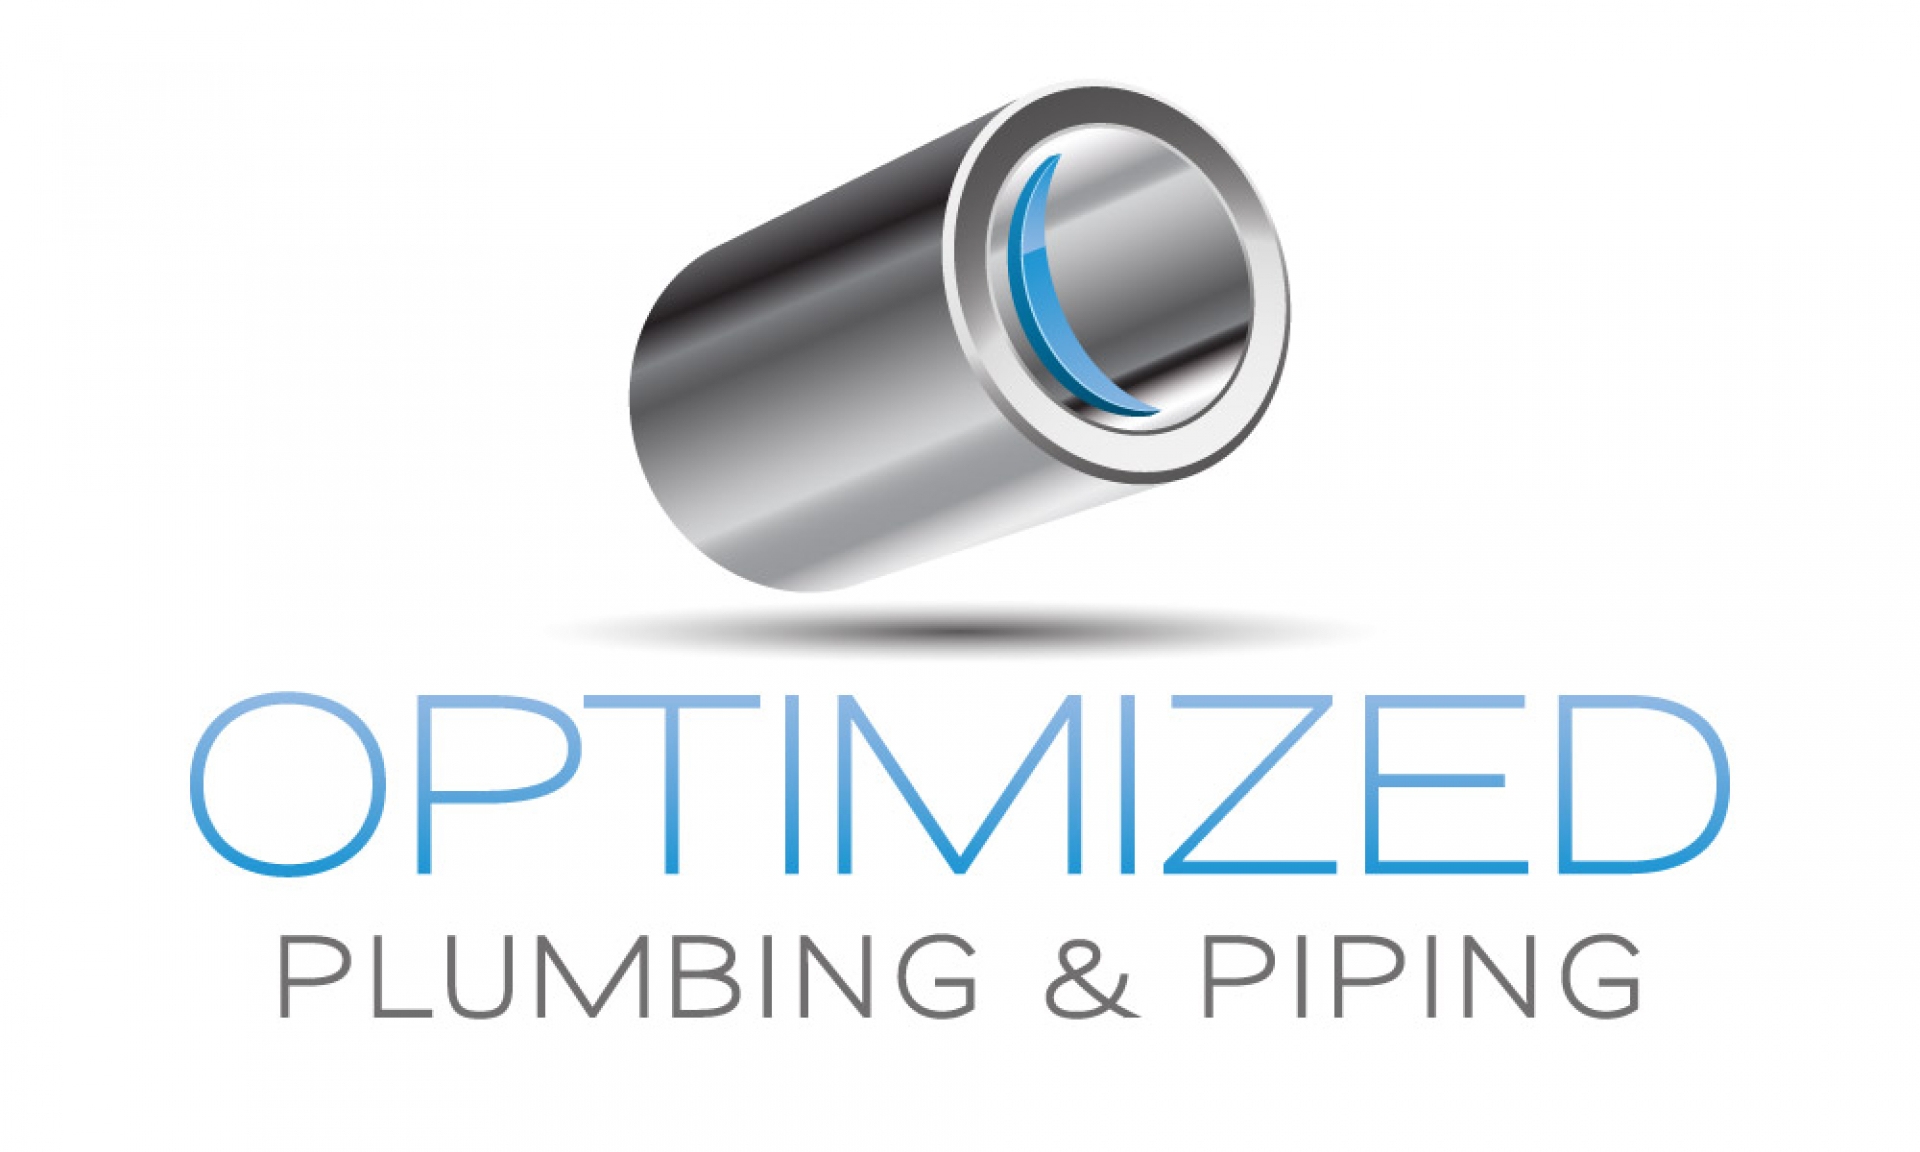 Optimized Plumbing & Piping Inc company logo